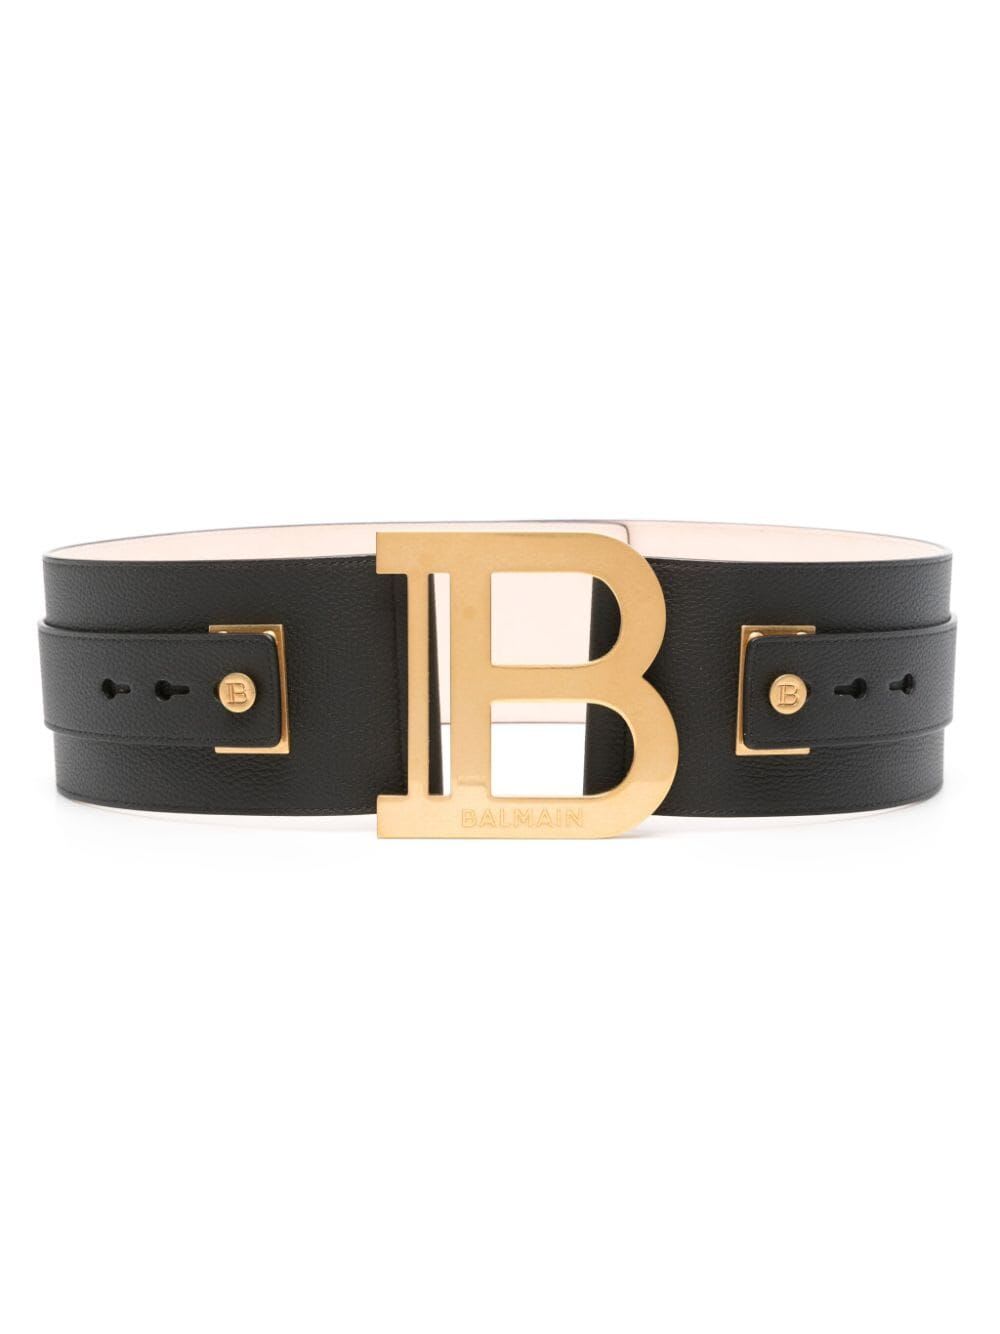 B-belt 7,5cm